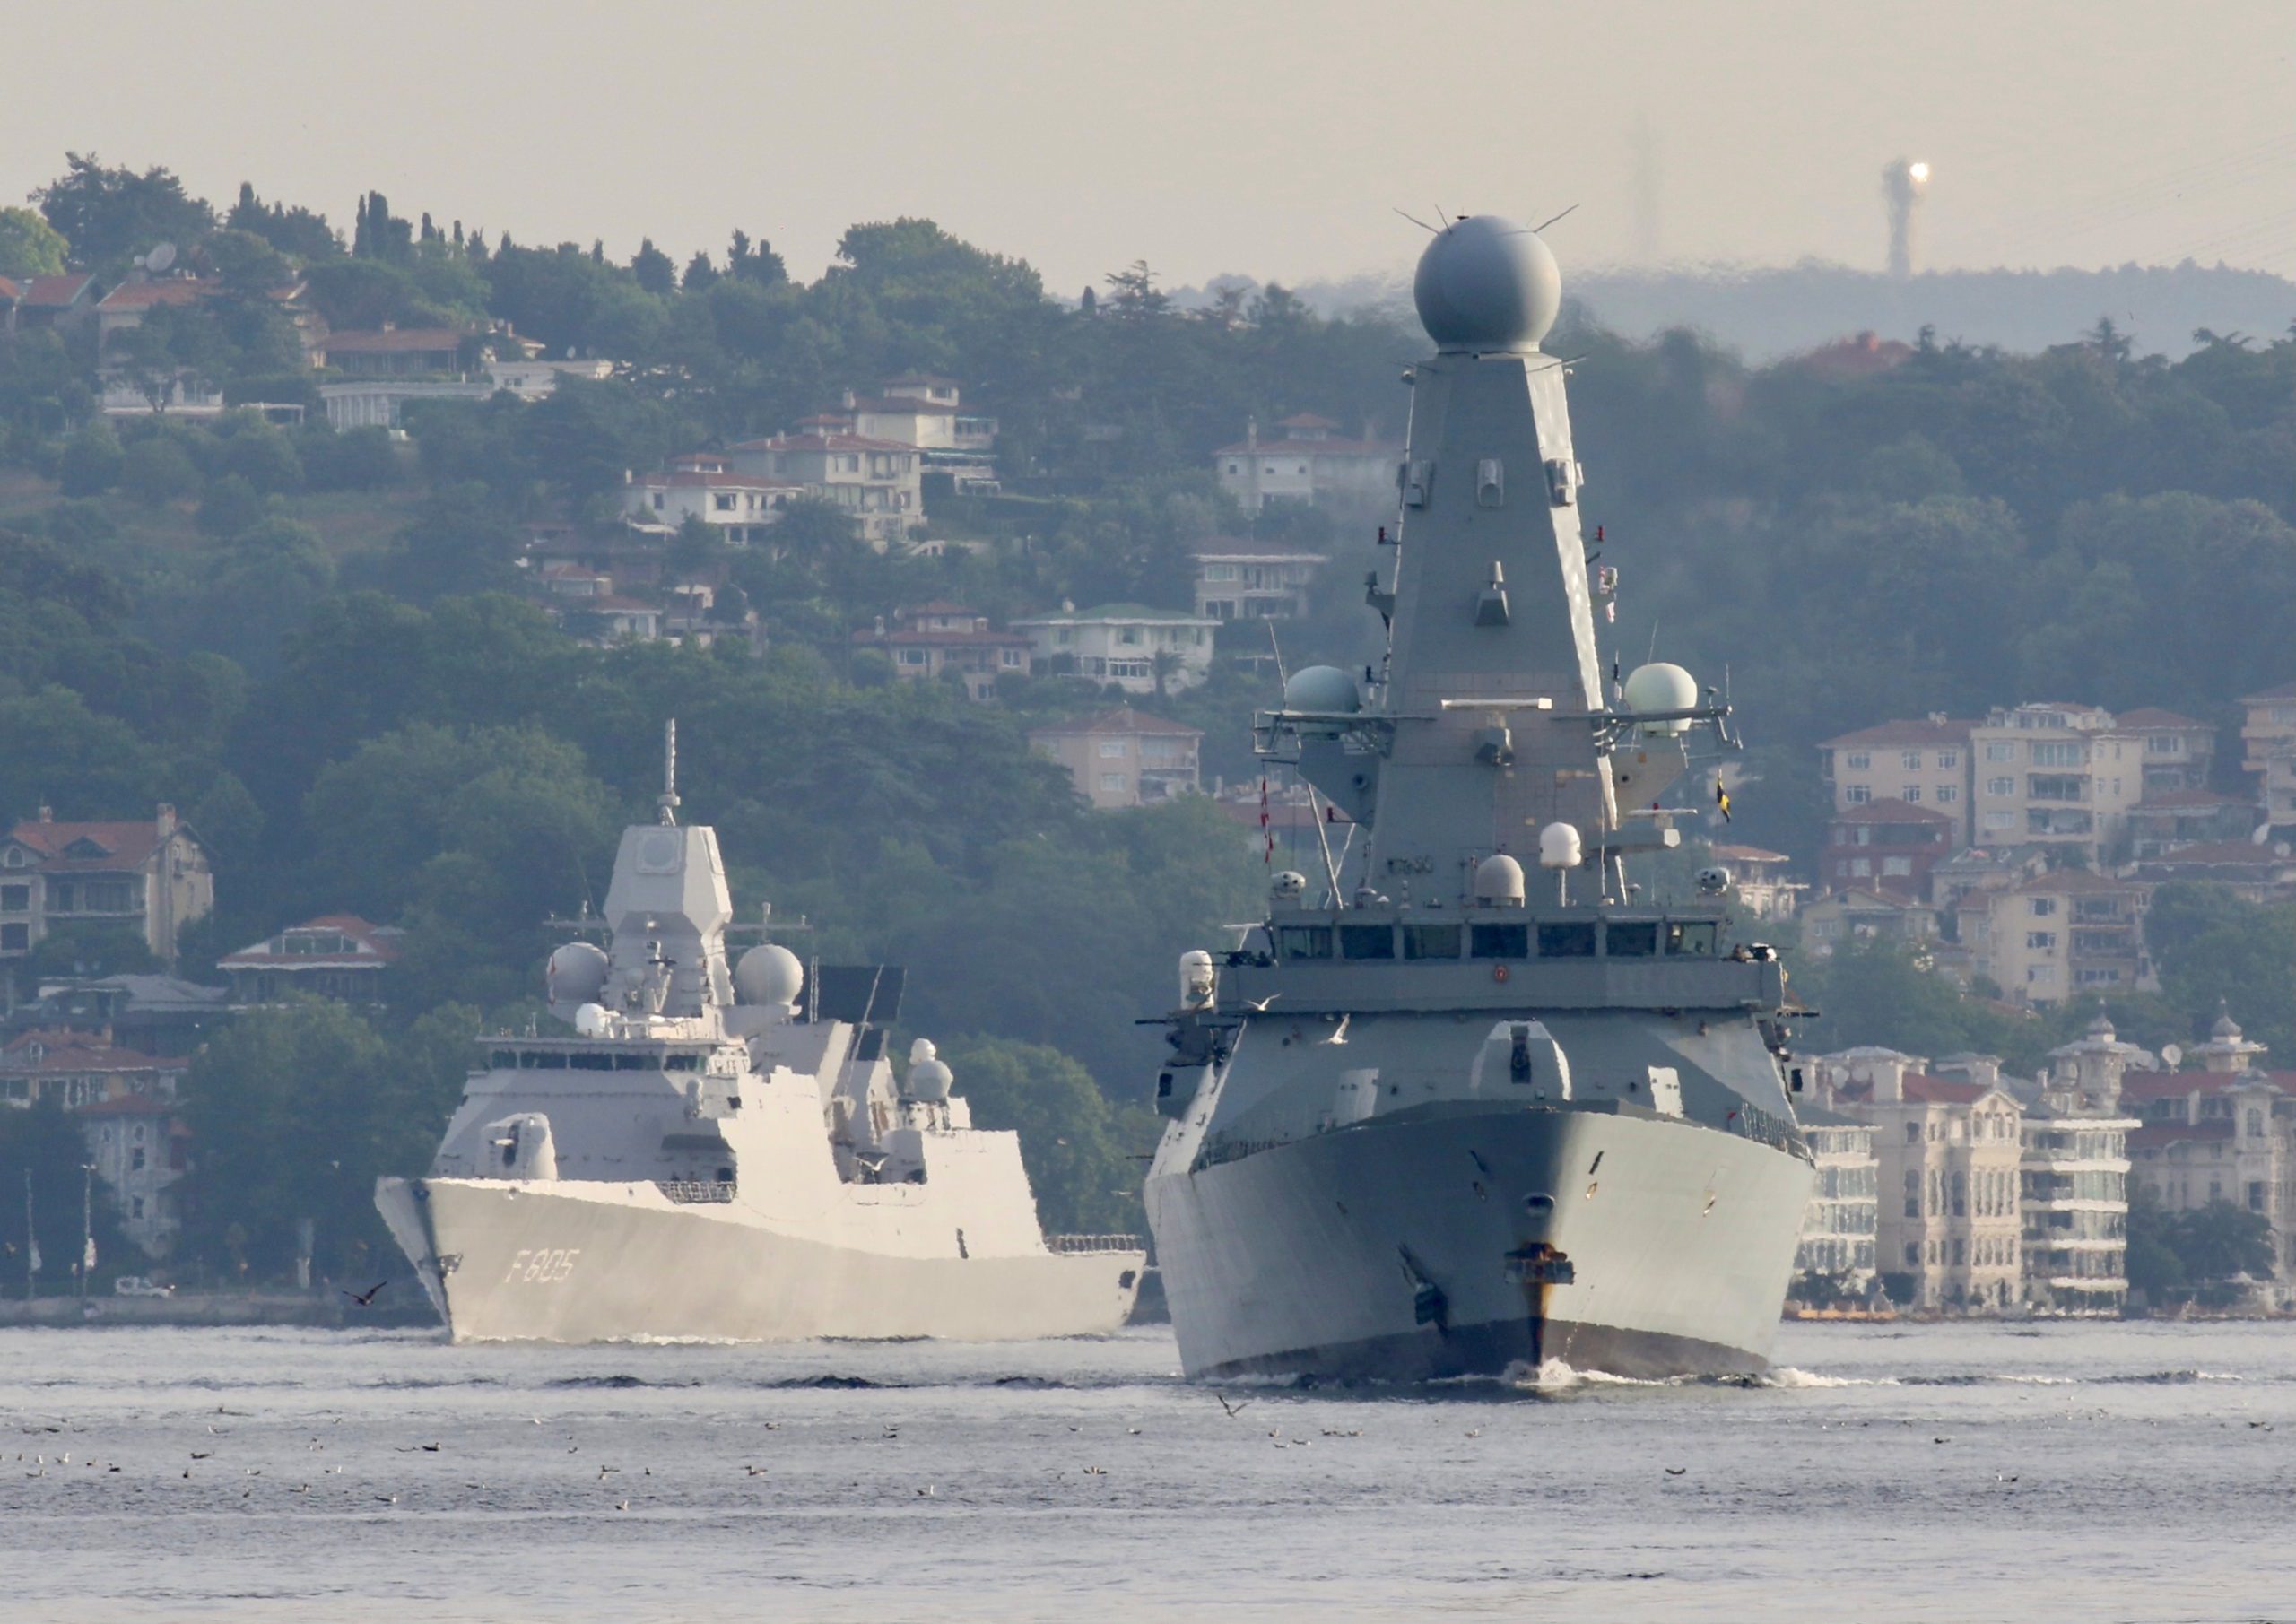 British Royal Navy destroyer HMS Defender in the Bosphorus Strait